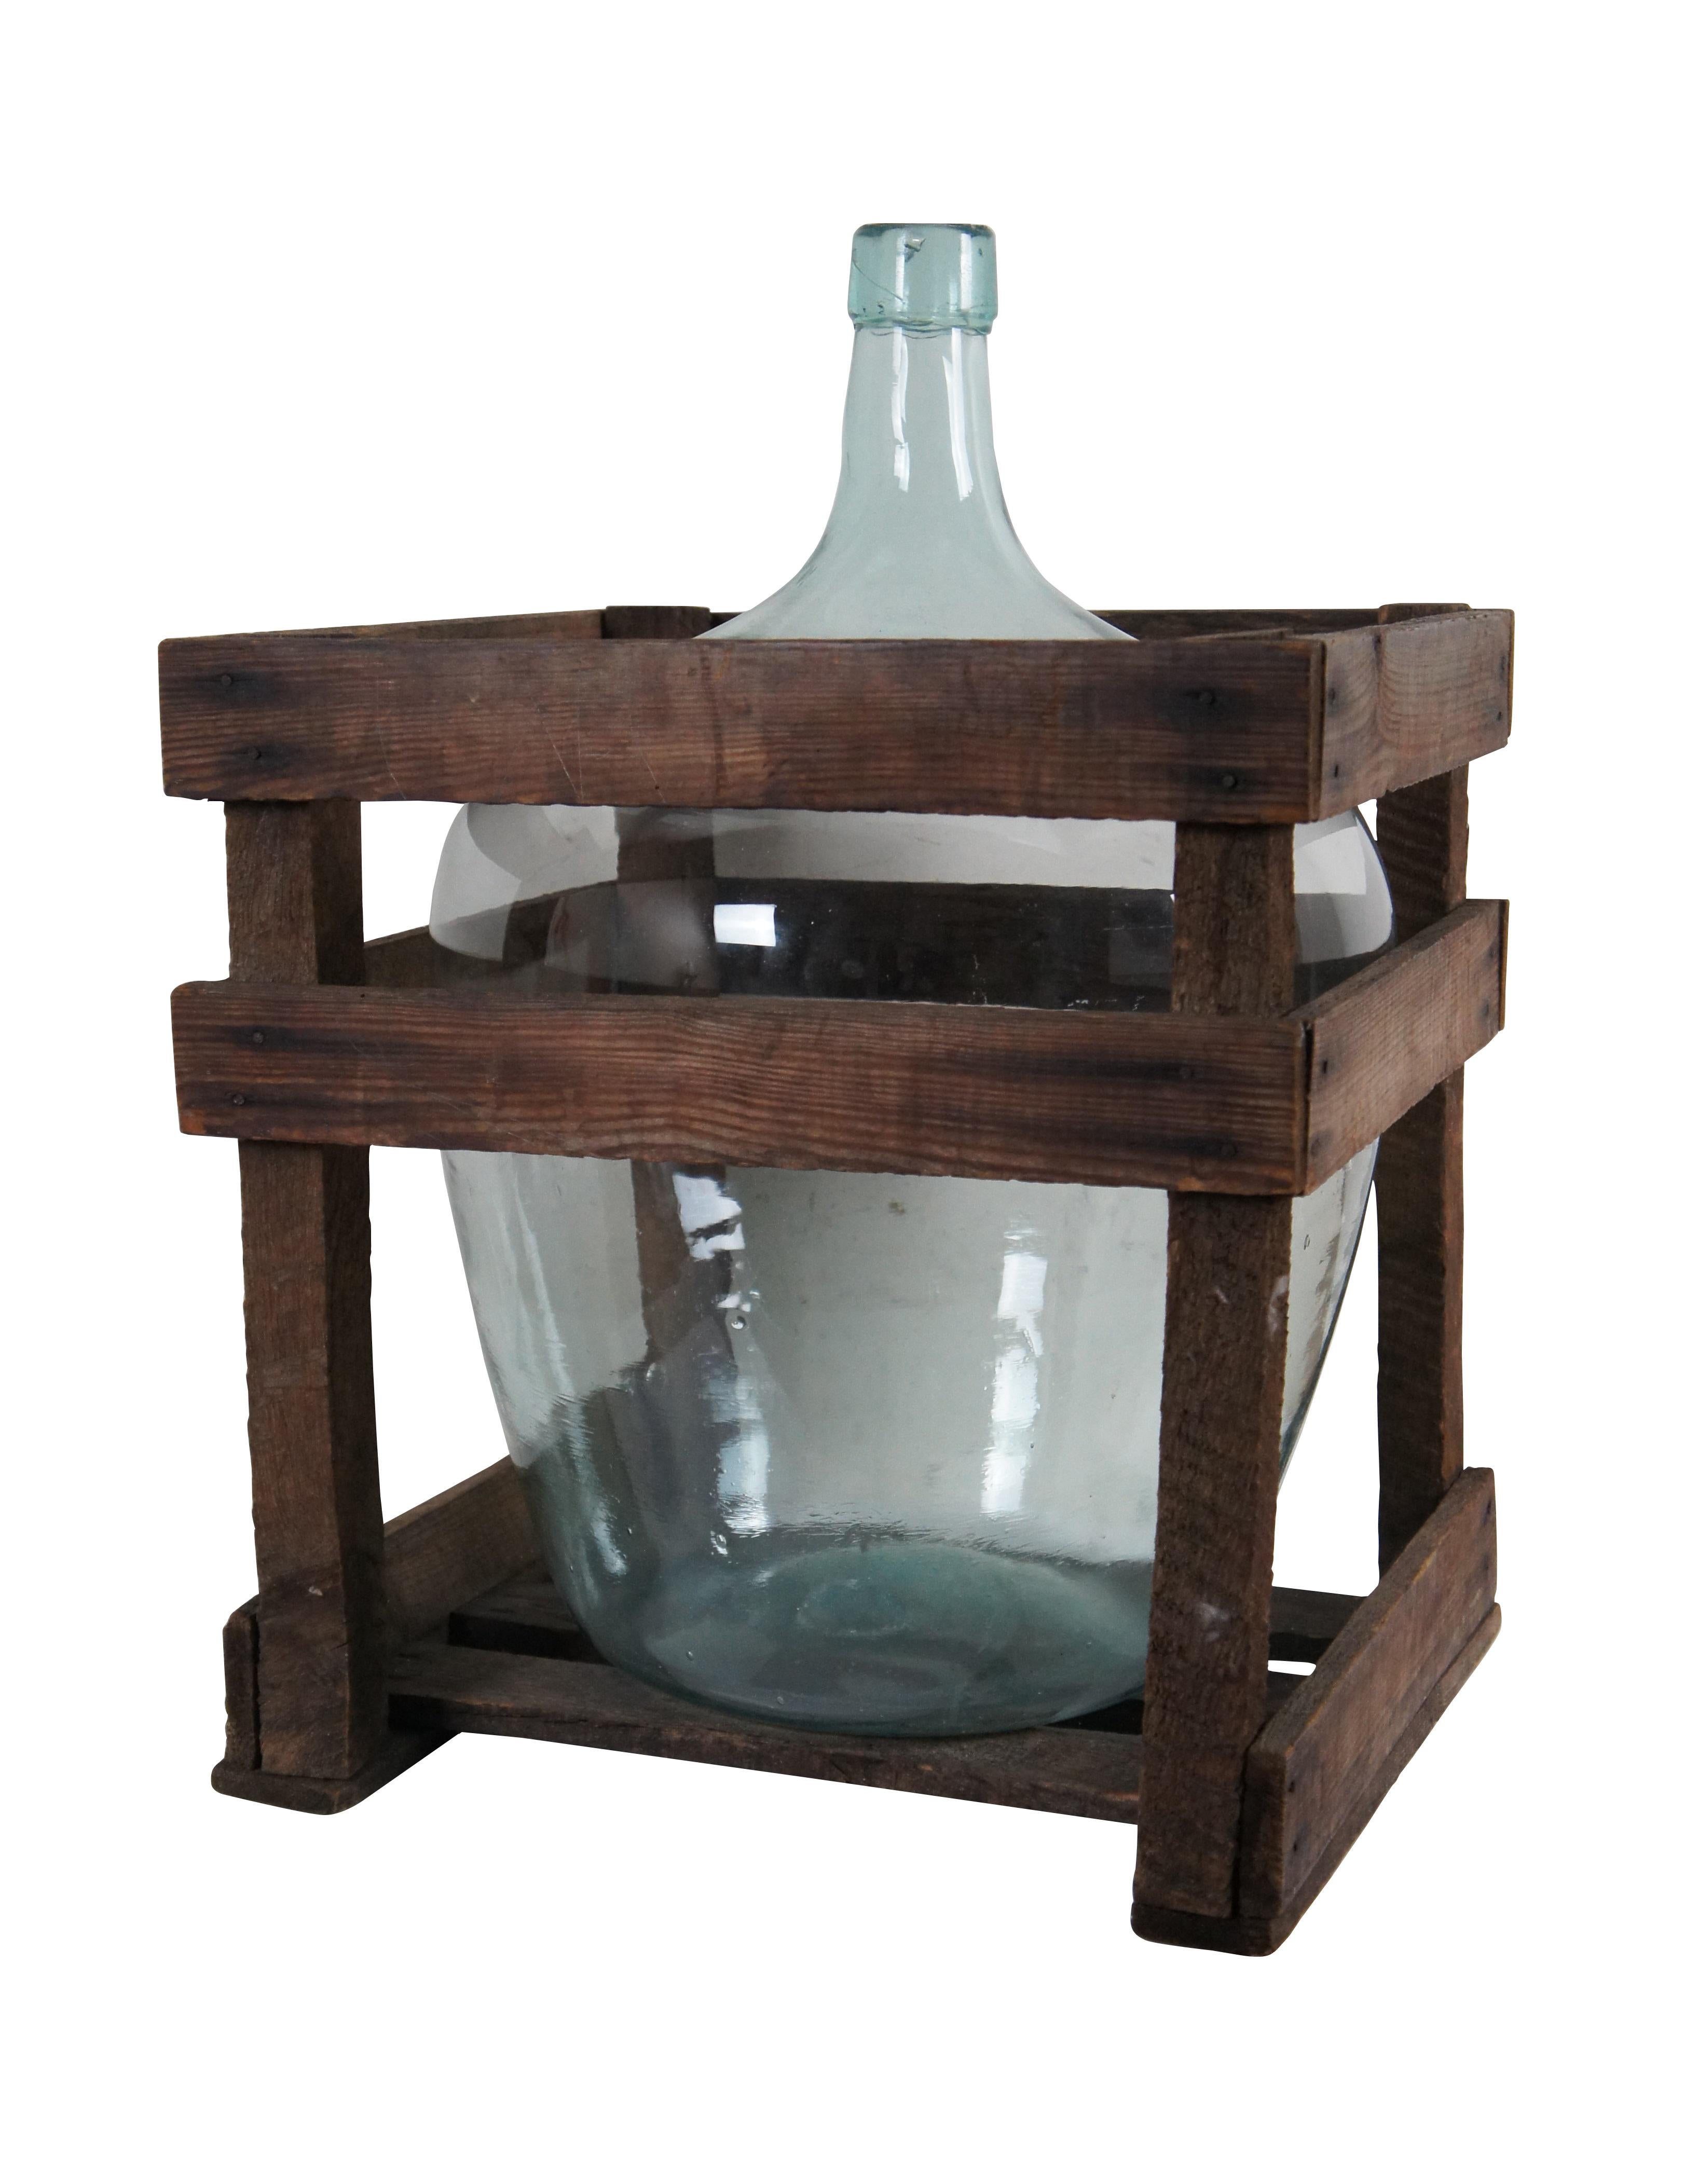 Antique pale blue / clear glass demijohn wine bottle / jug and wood slat storage crate.

Dimensions:
Bottle - 14.5